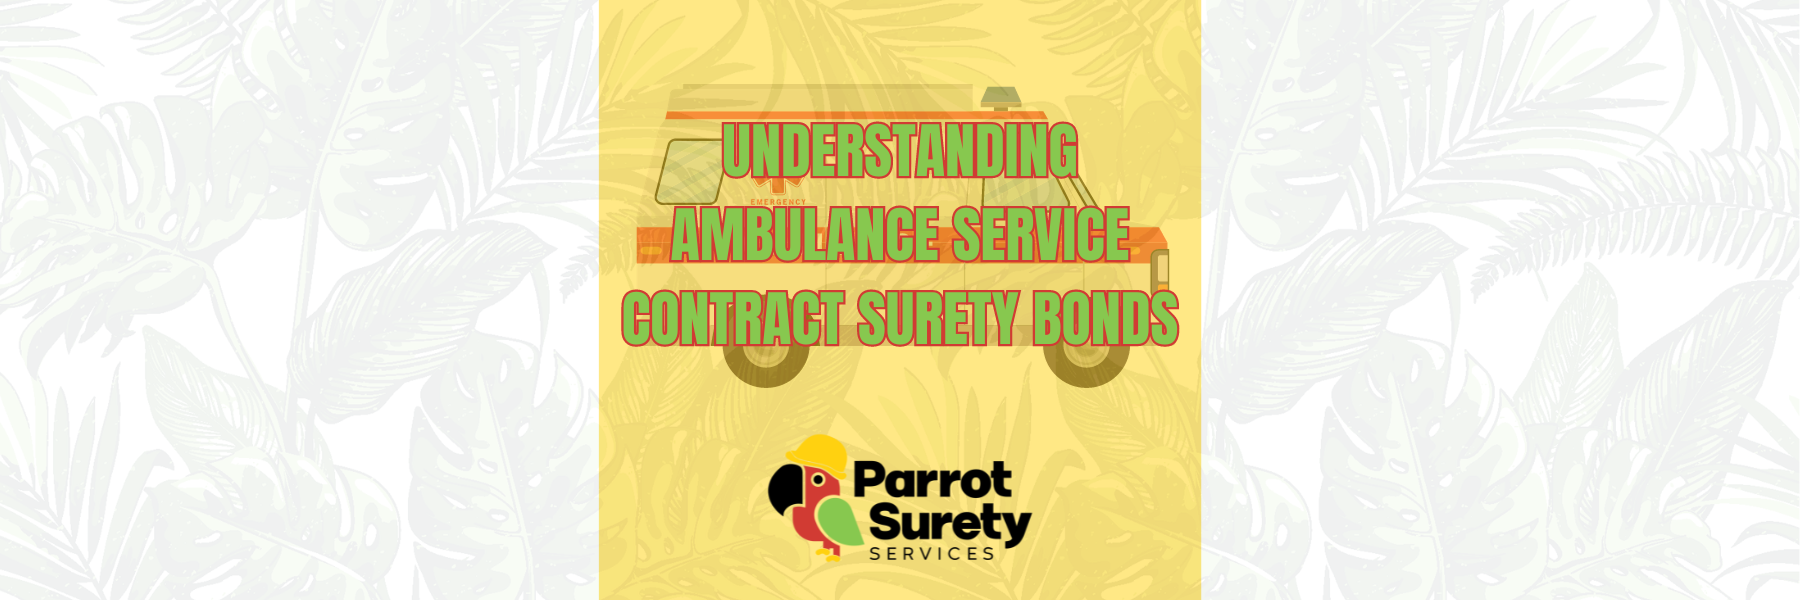 Understanding Ambulance Service Contract Surety Bonds title image